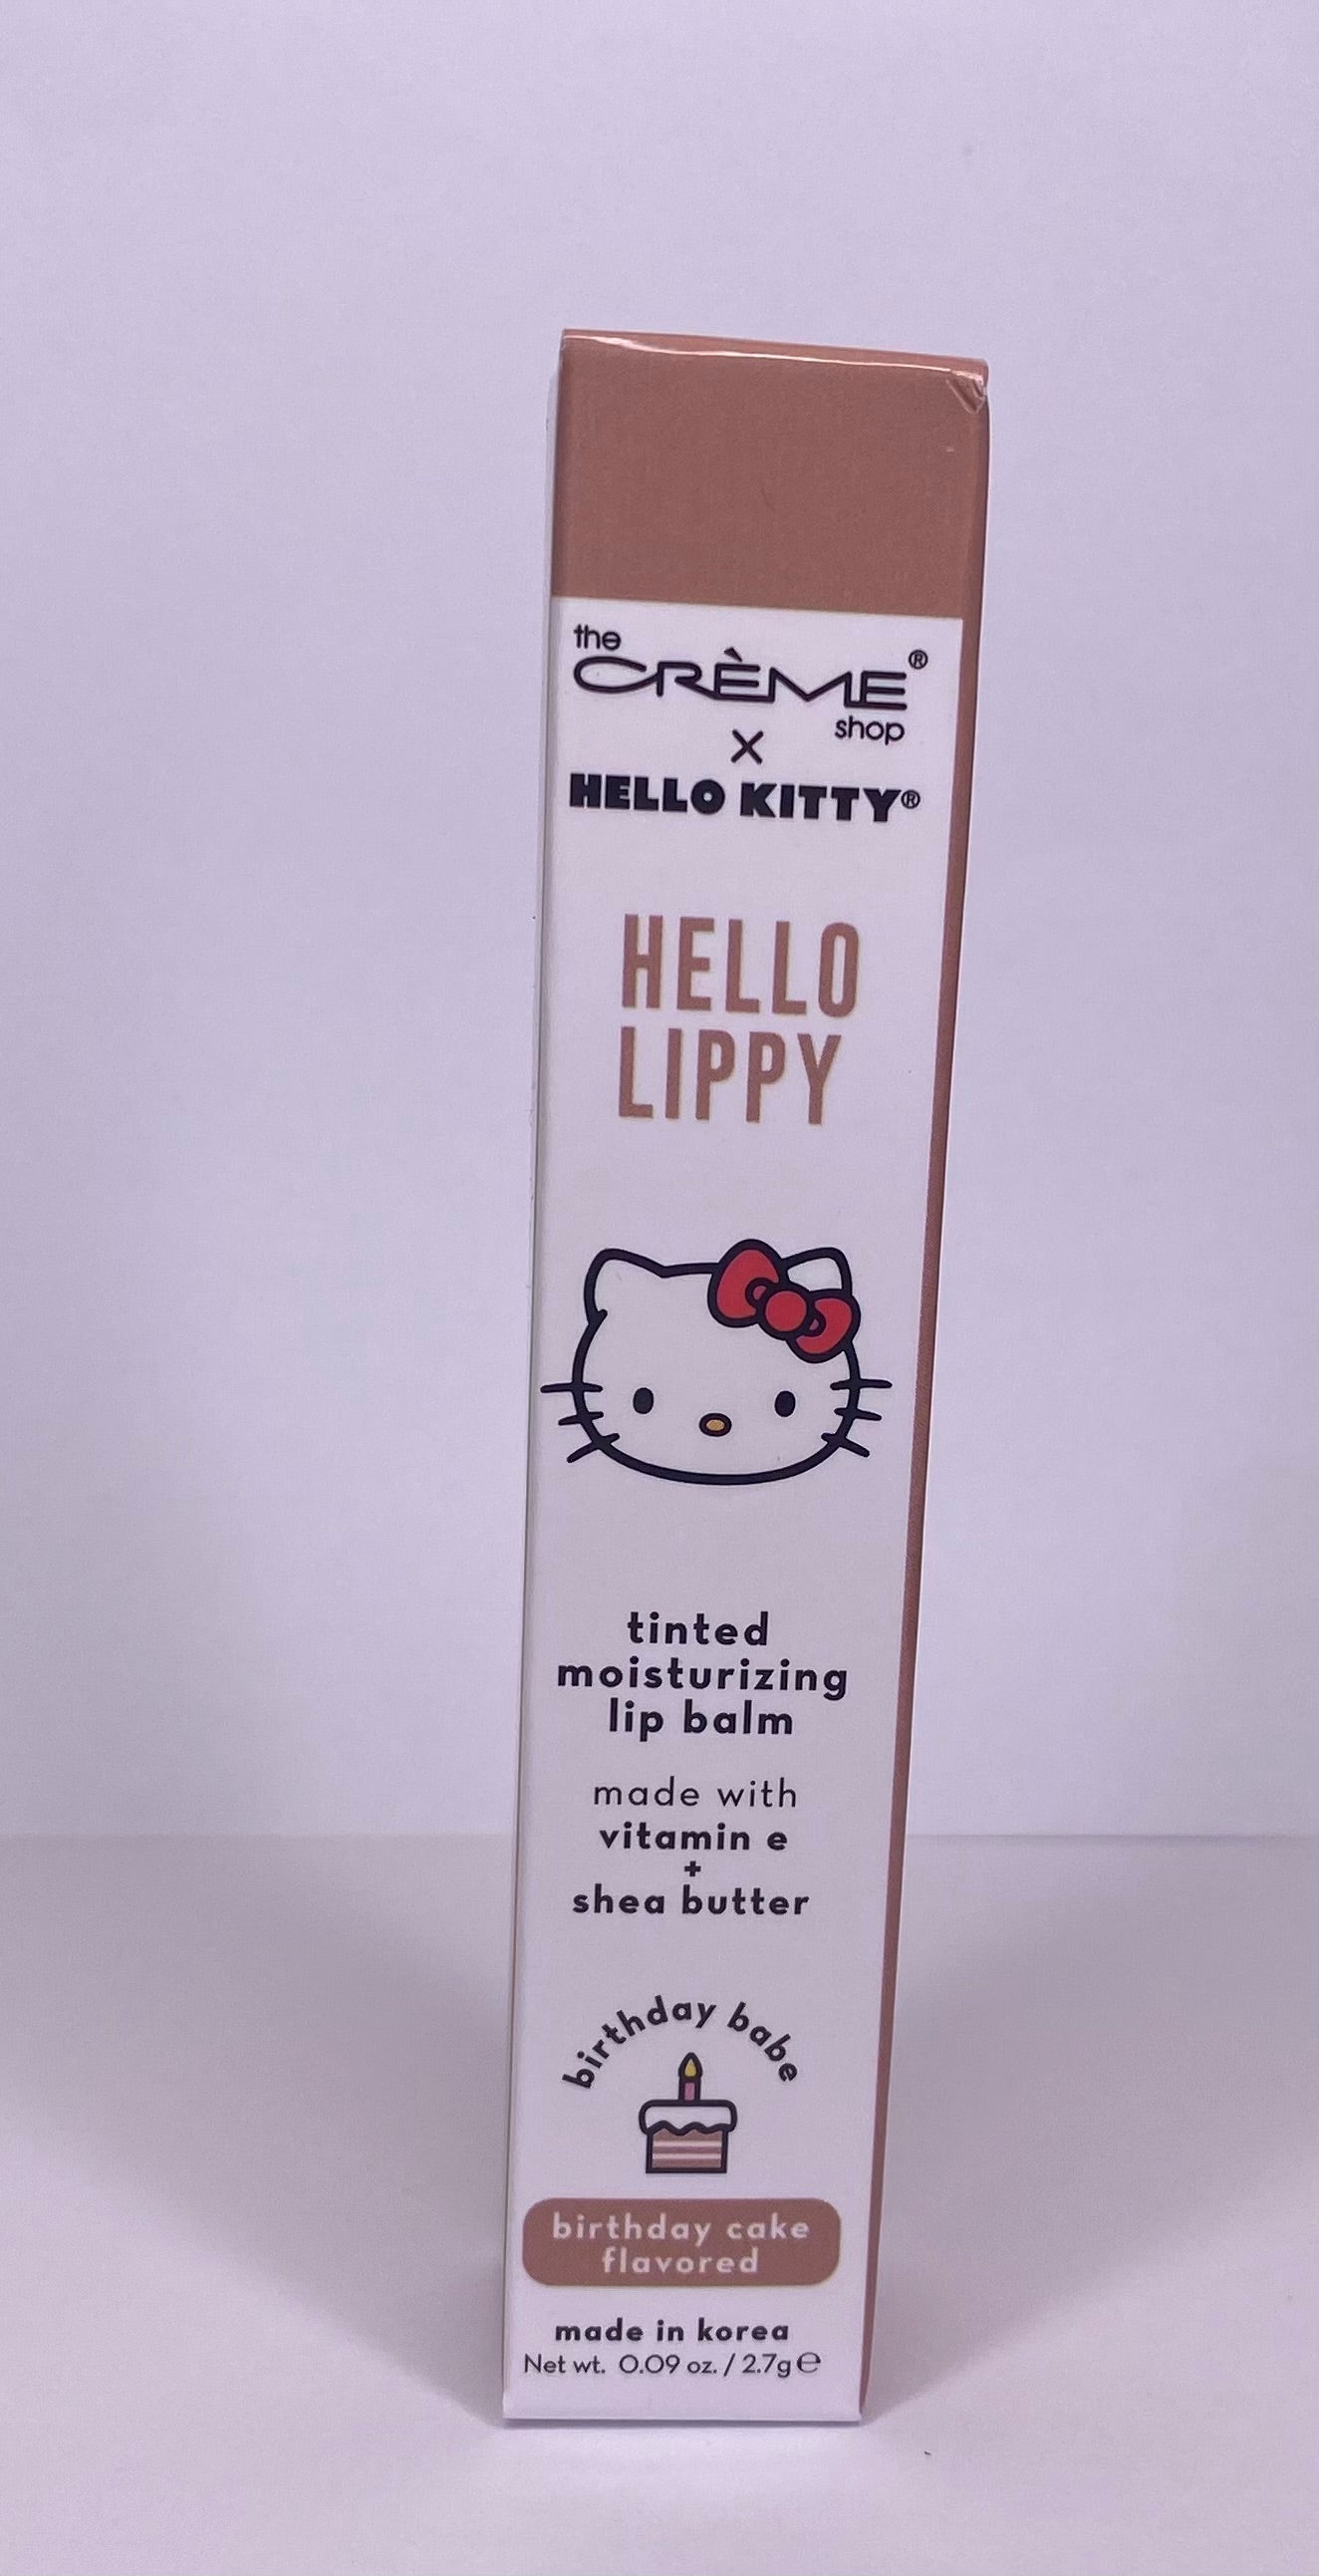 The Crème Shop x Hello Kitty Hello Lippy